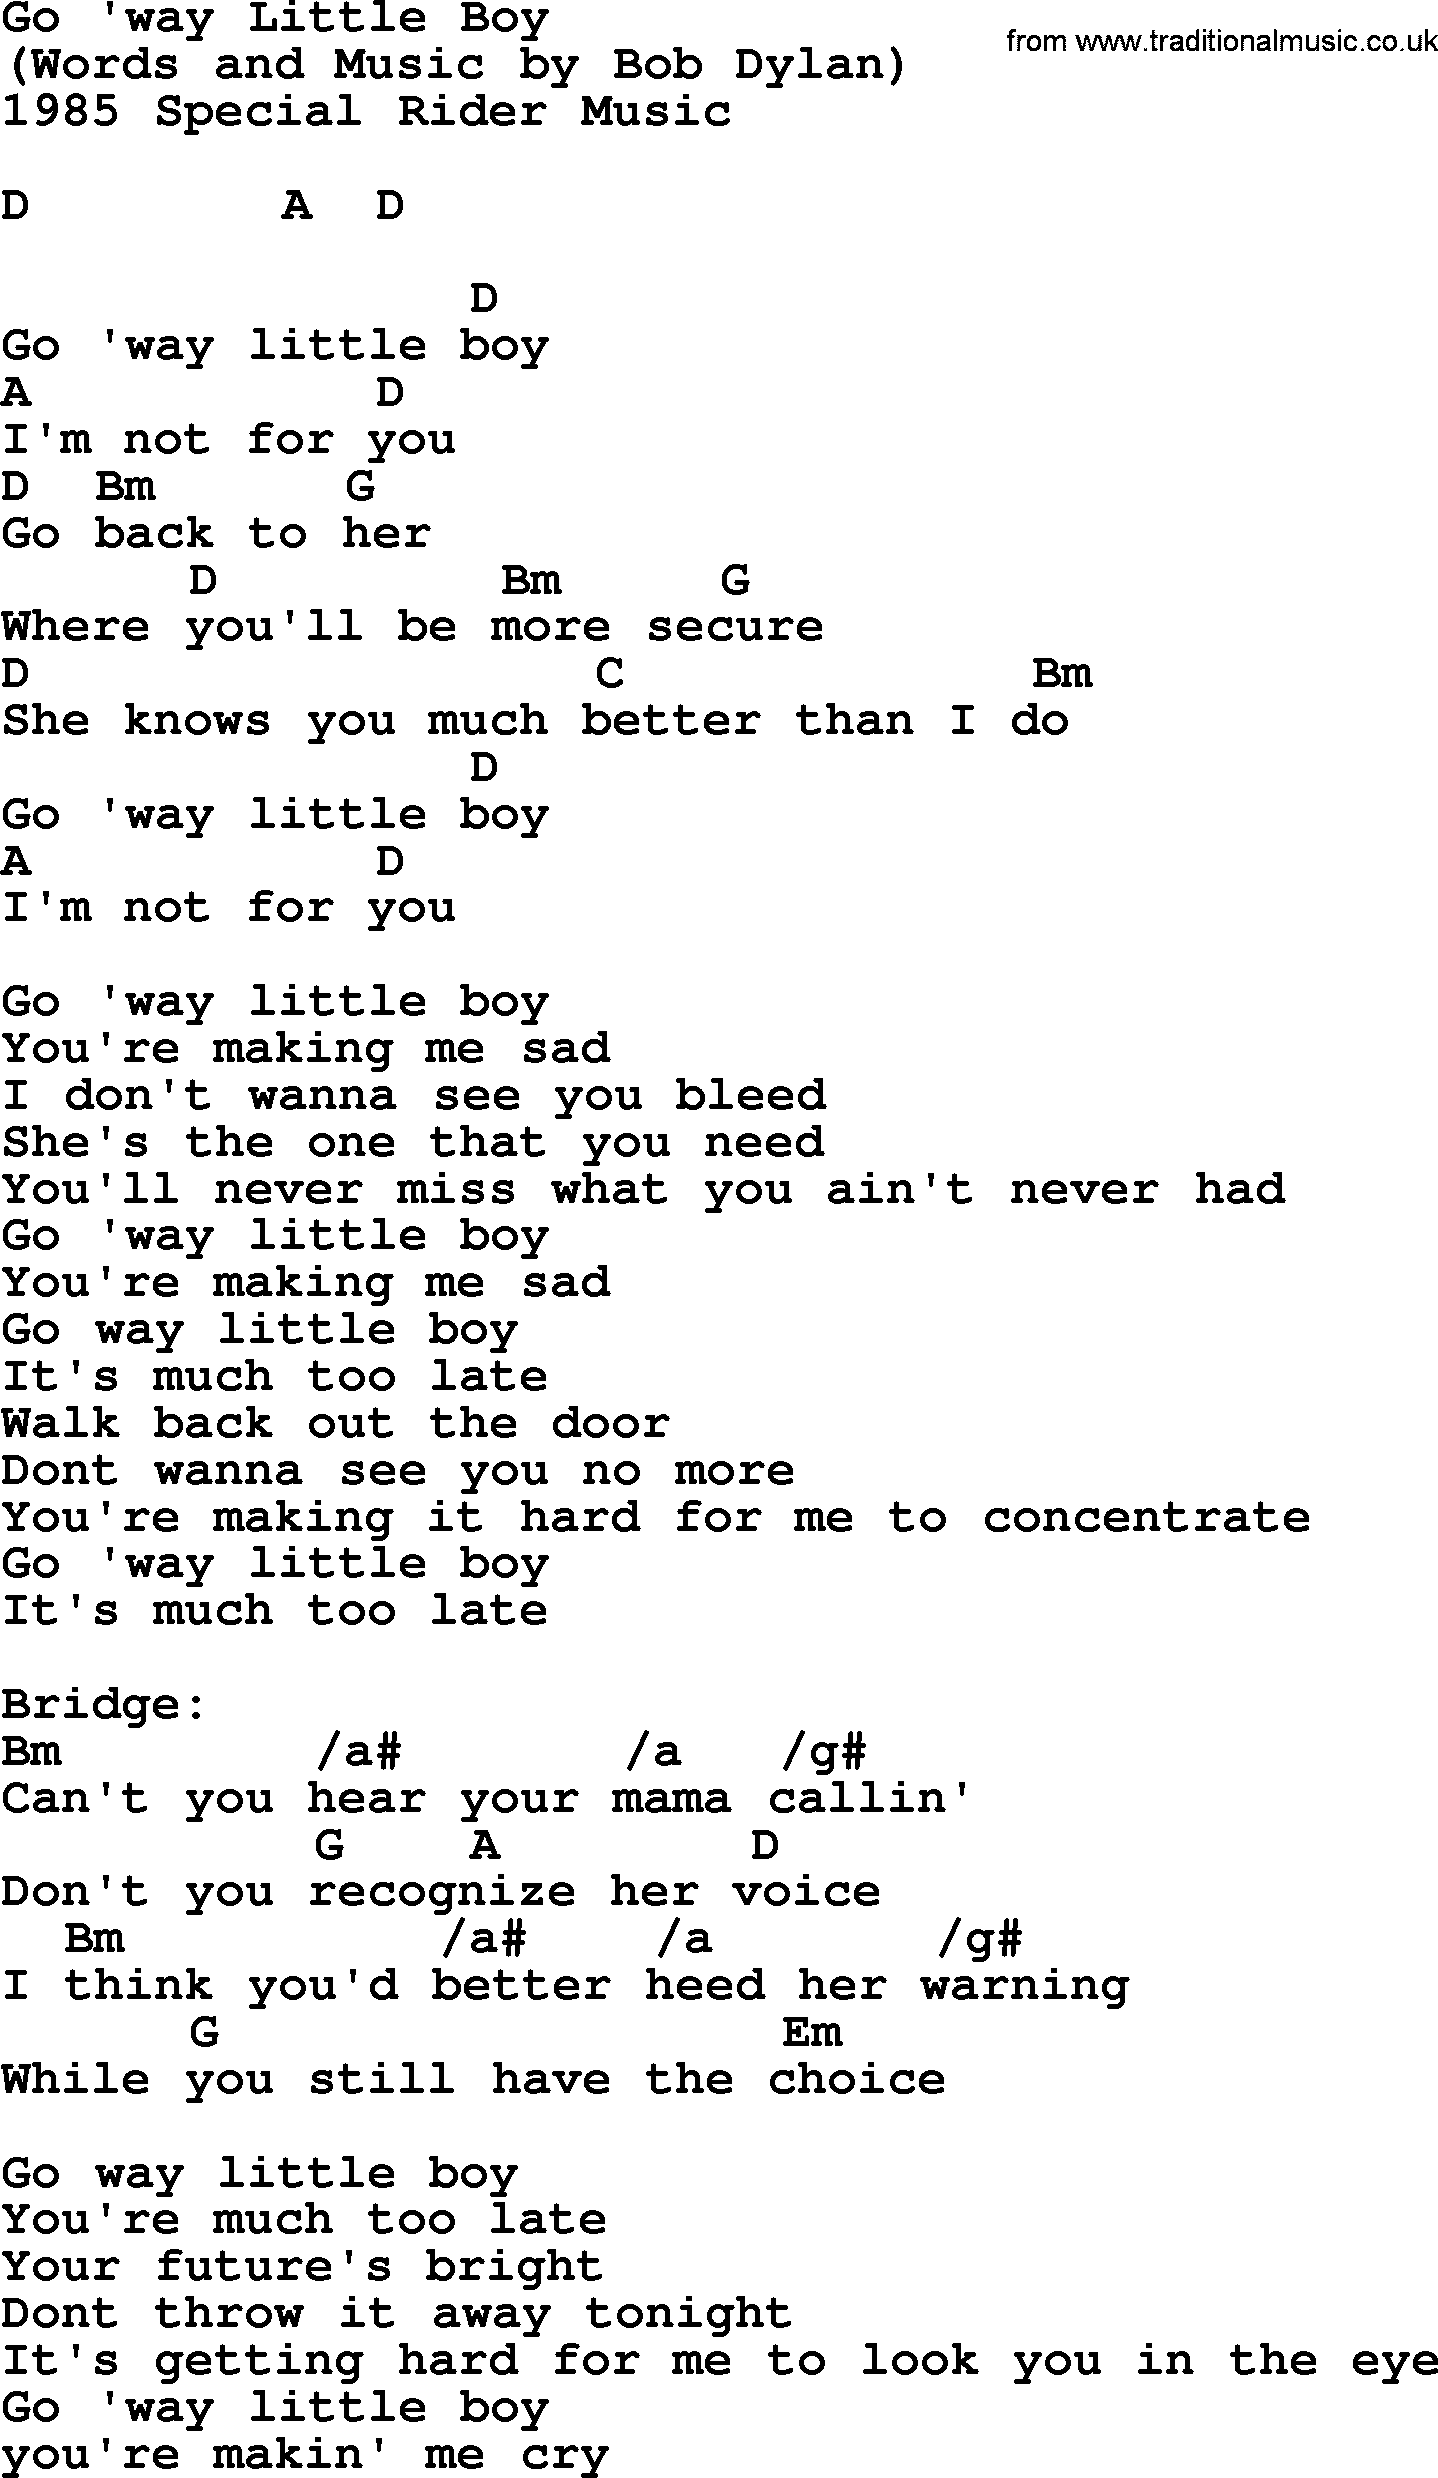 Bob Dylan song, lyrics with chords - Go 'way Little Boy